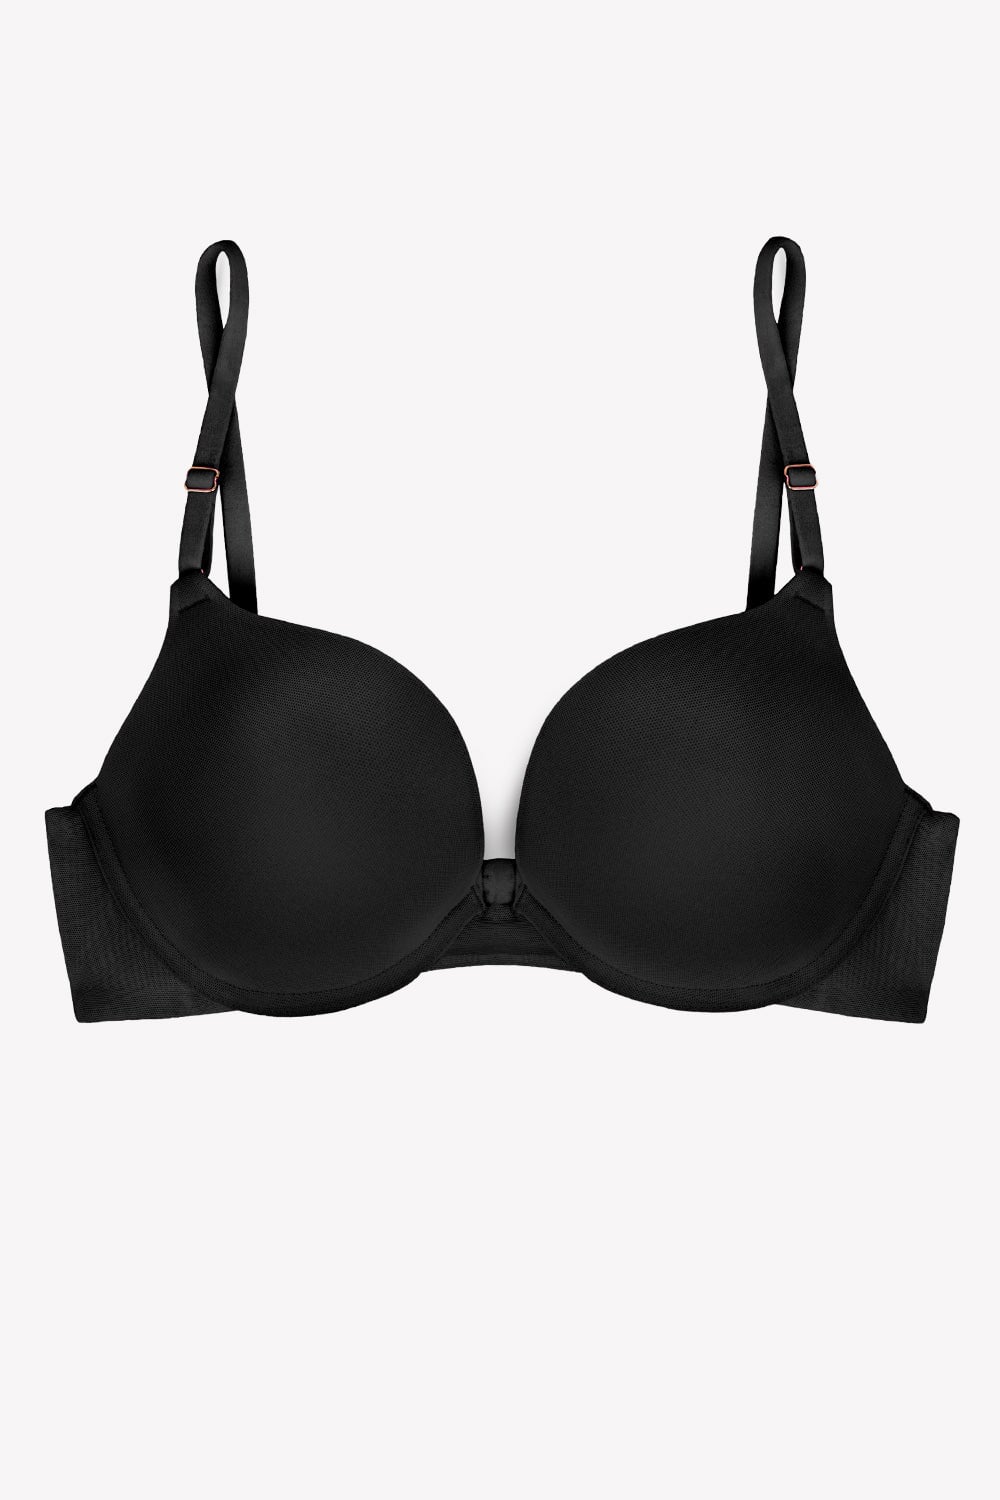 🌞 Add 2 cups bra size! Black ultra padded push up bra size 32B to